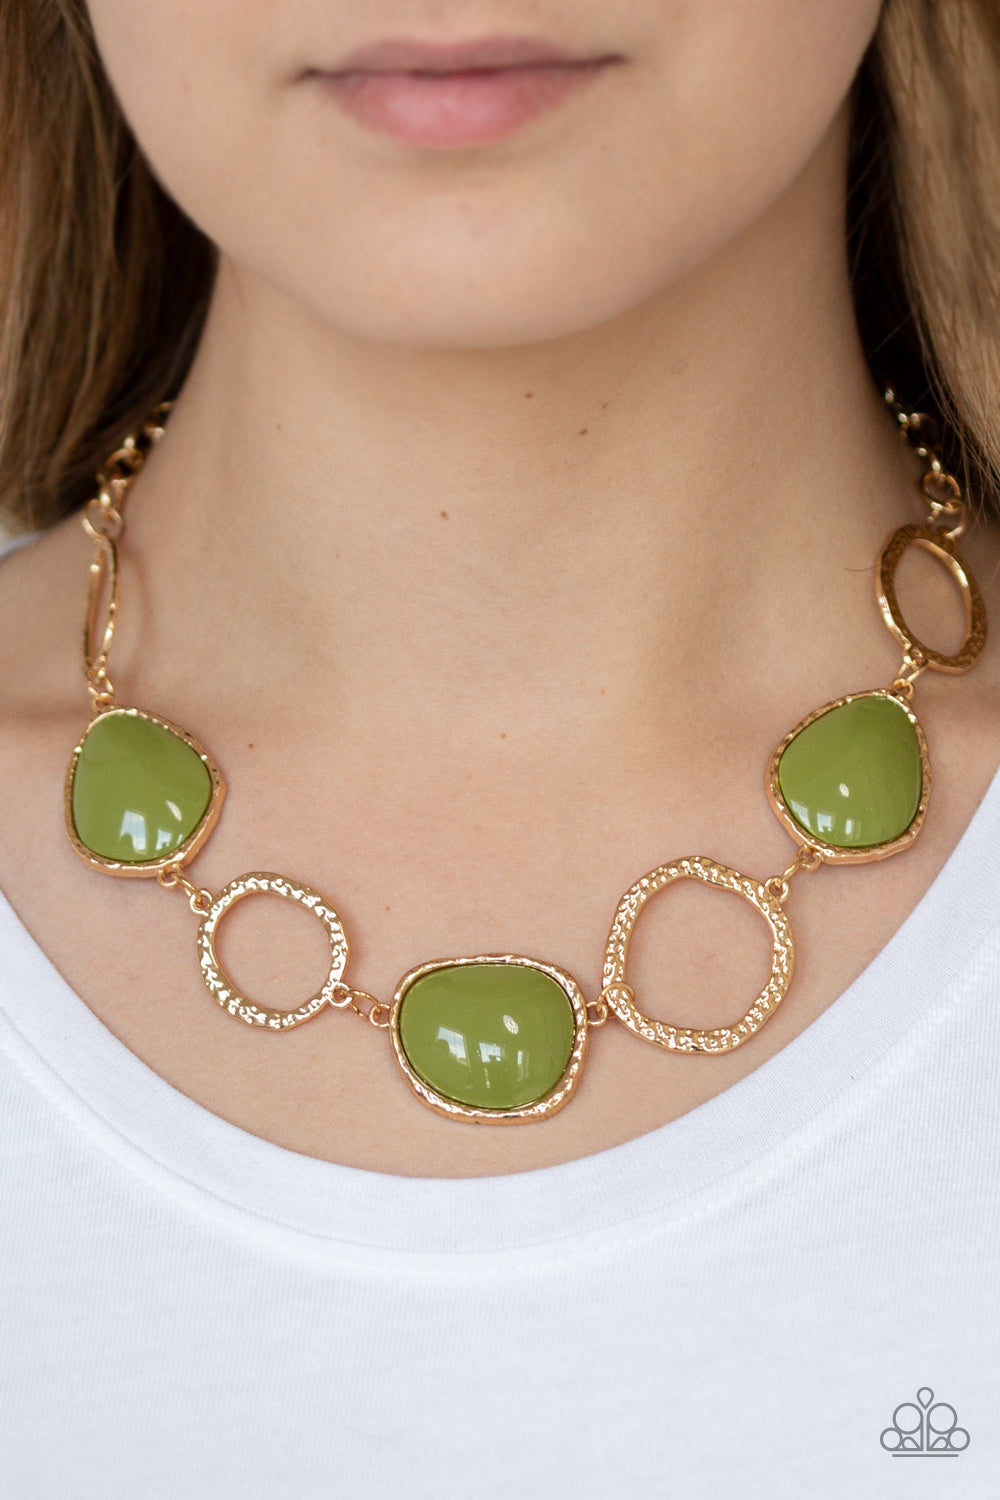 Paparazzi Accessories - Haute Heirloom - Green Necklace